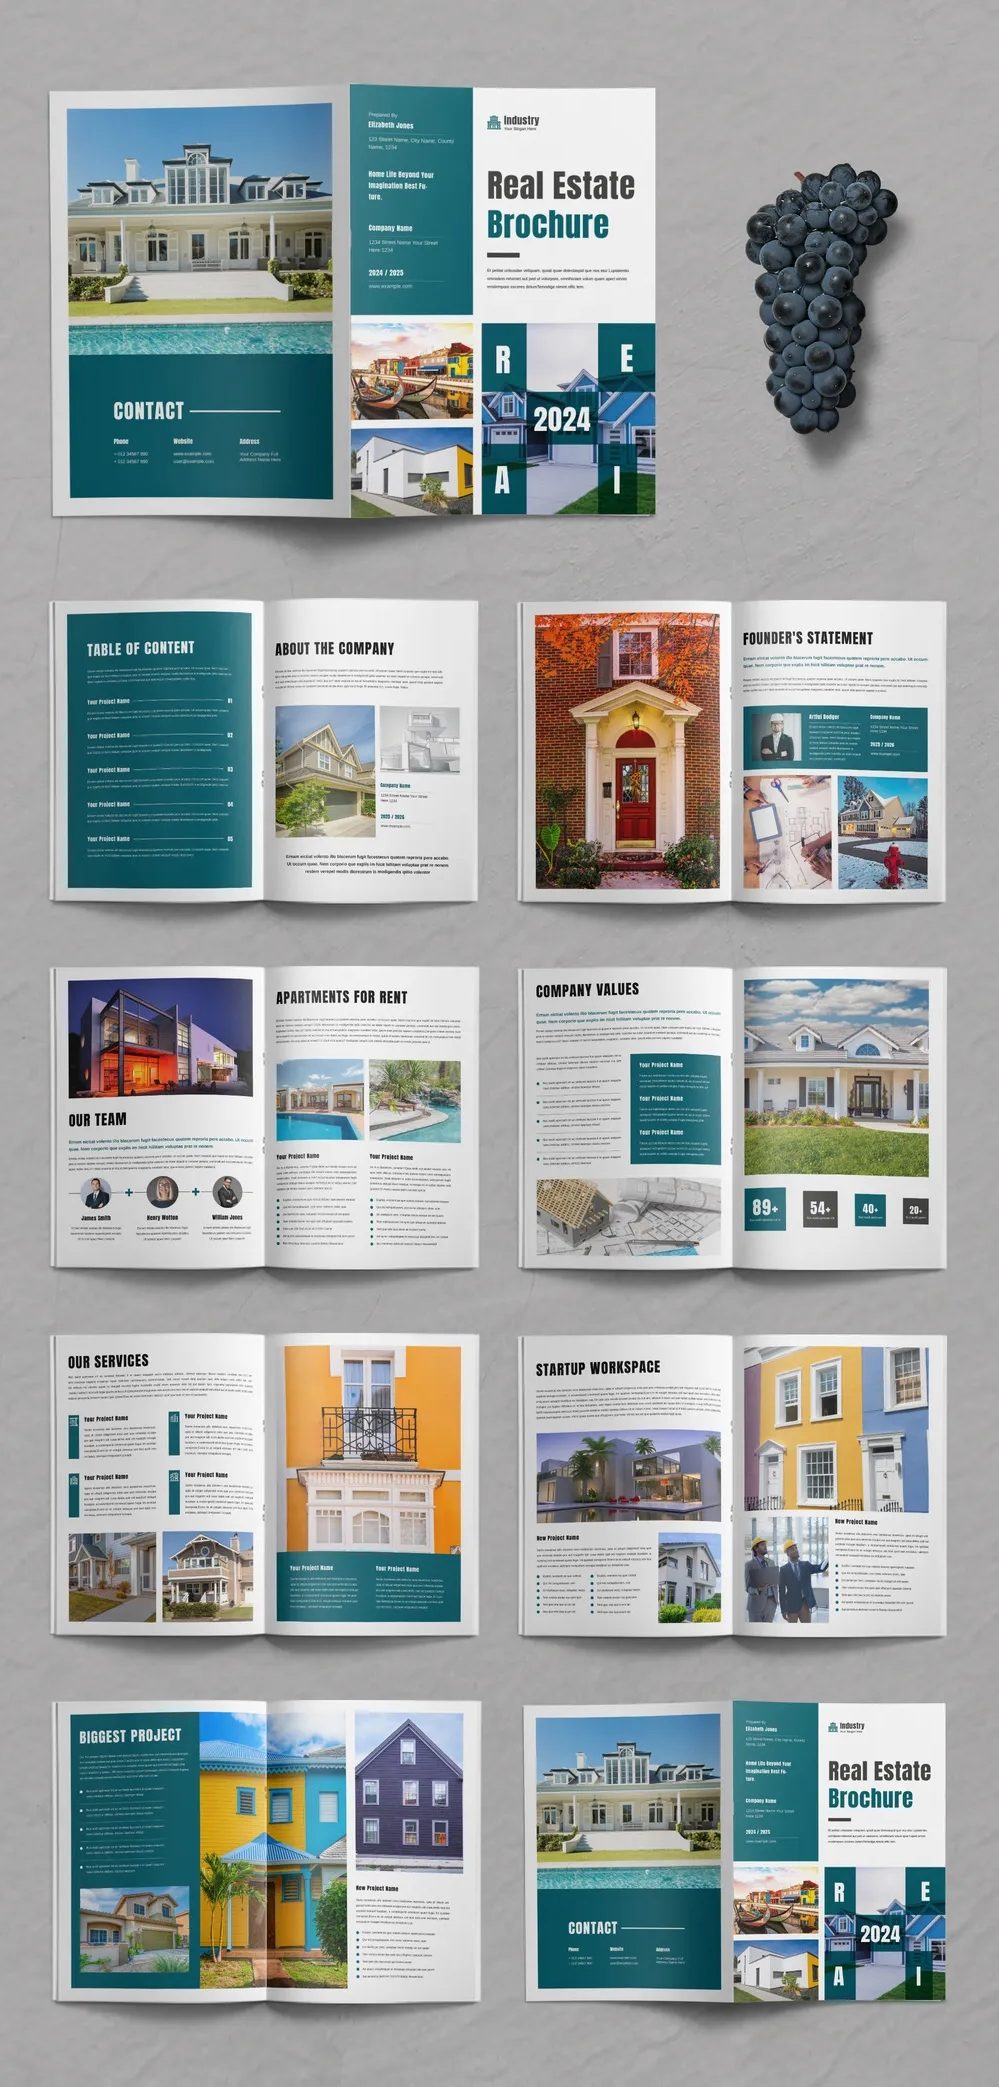 Adobestock - Real Estate Brochure Template 721821697